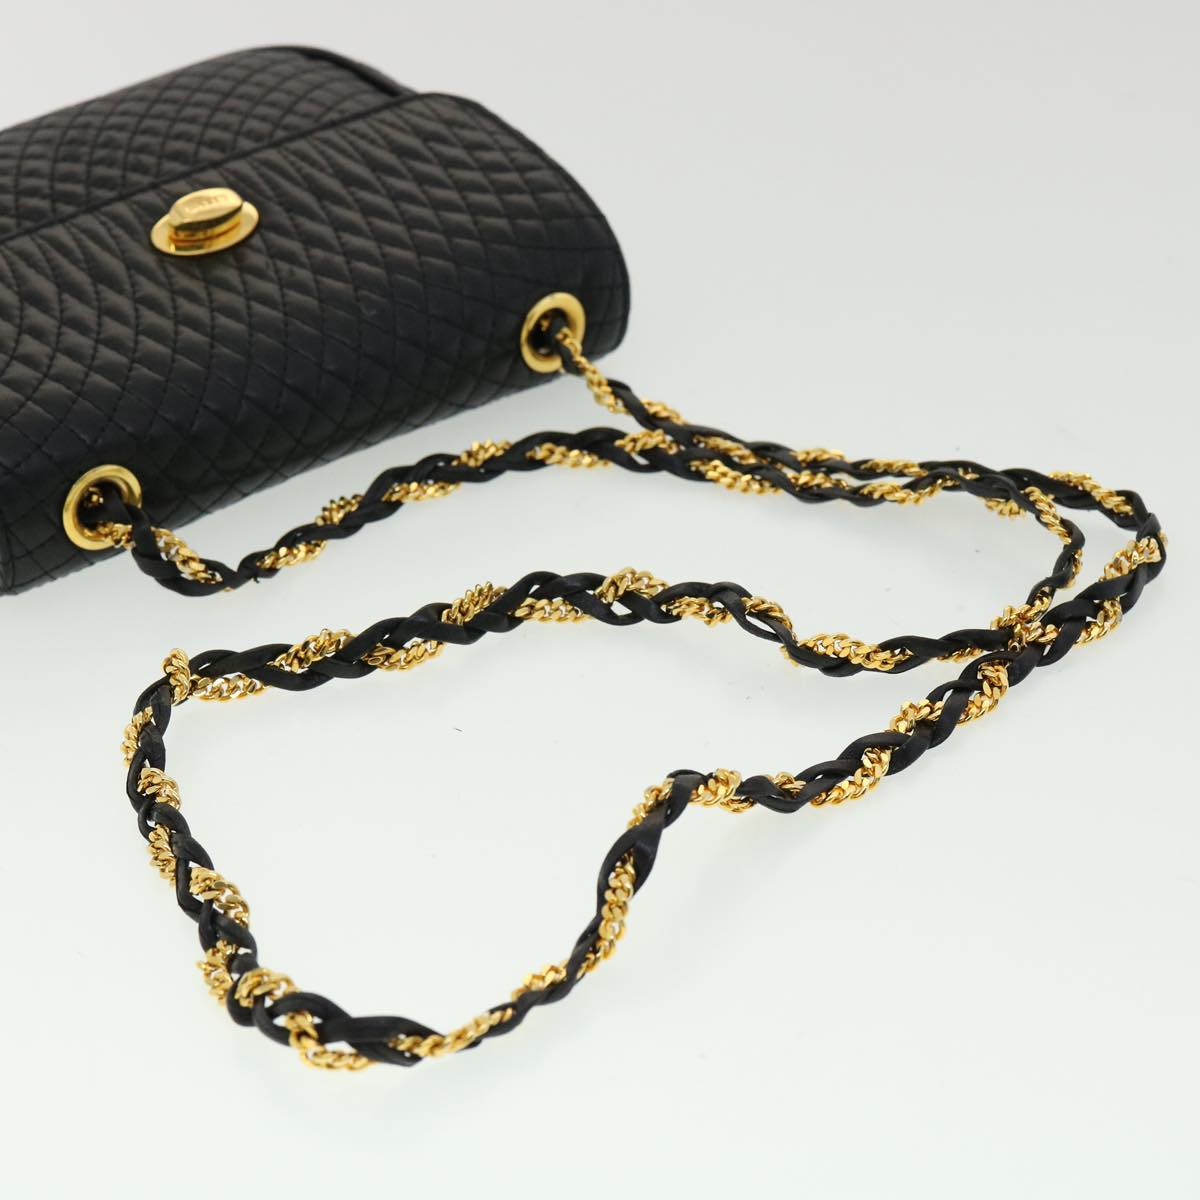 Bally Matelasse Chain Shoulder Bag Leather Black Auth Am3215